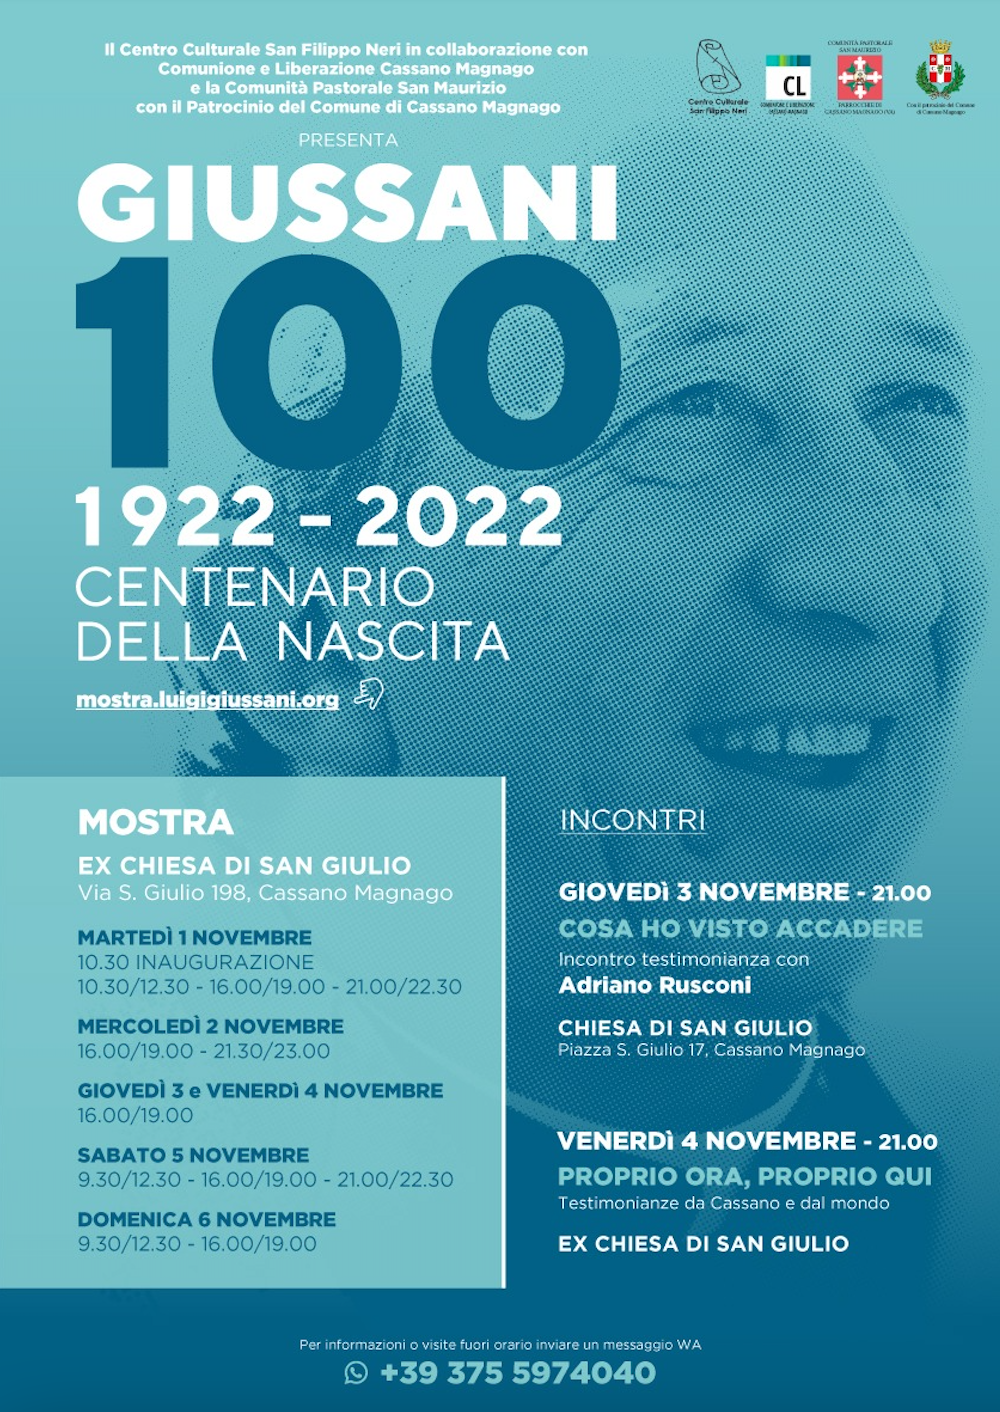 Featured image for “Cassano Magnano: Giussani 100”